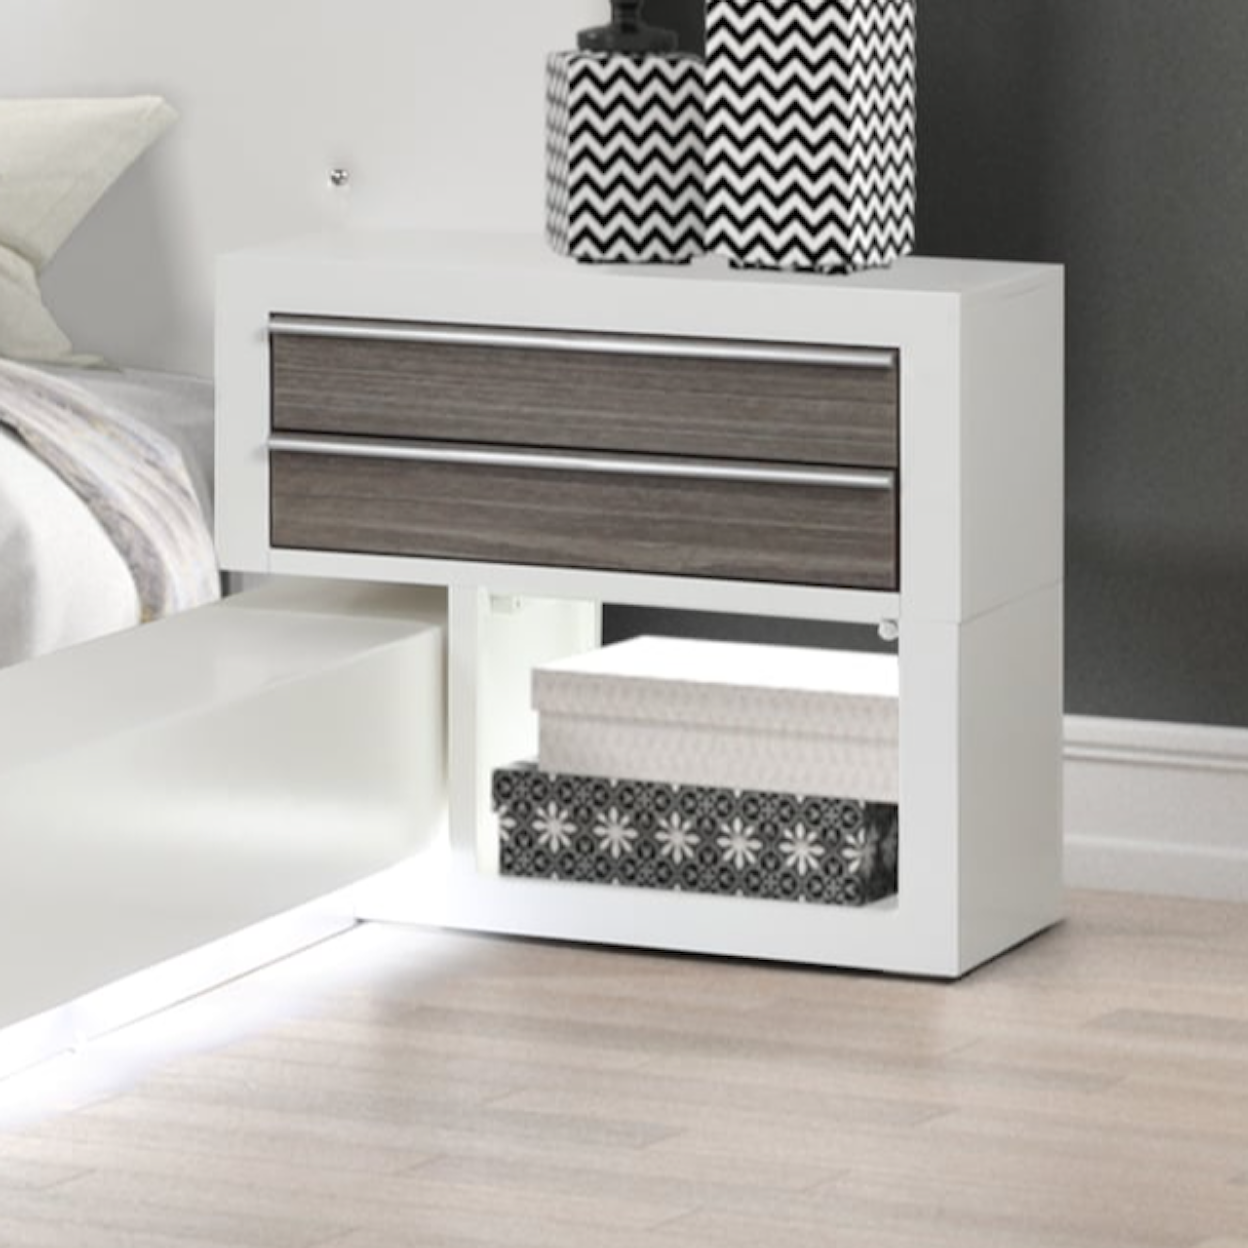 New Classic Furniture Nakita 5-Piece King Bedroom Set